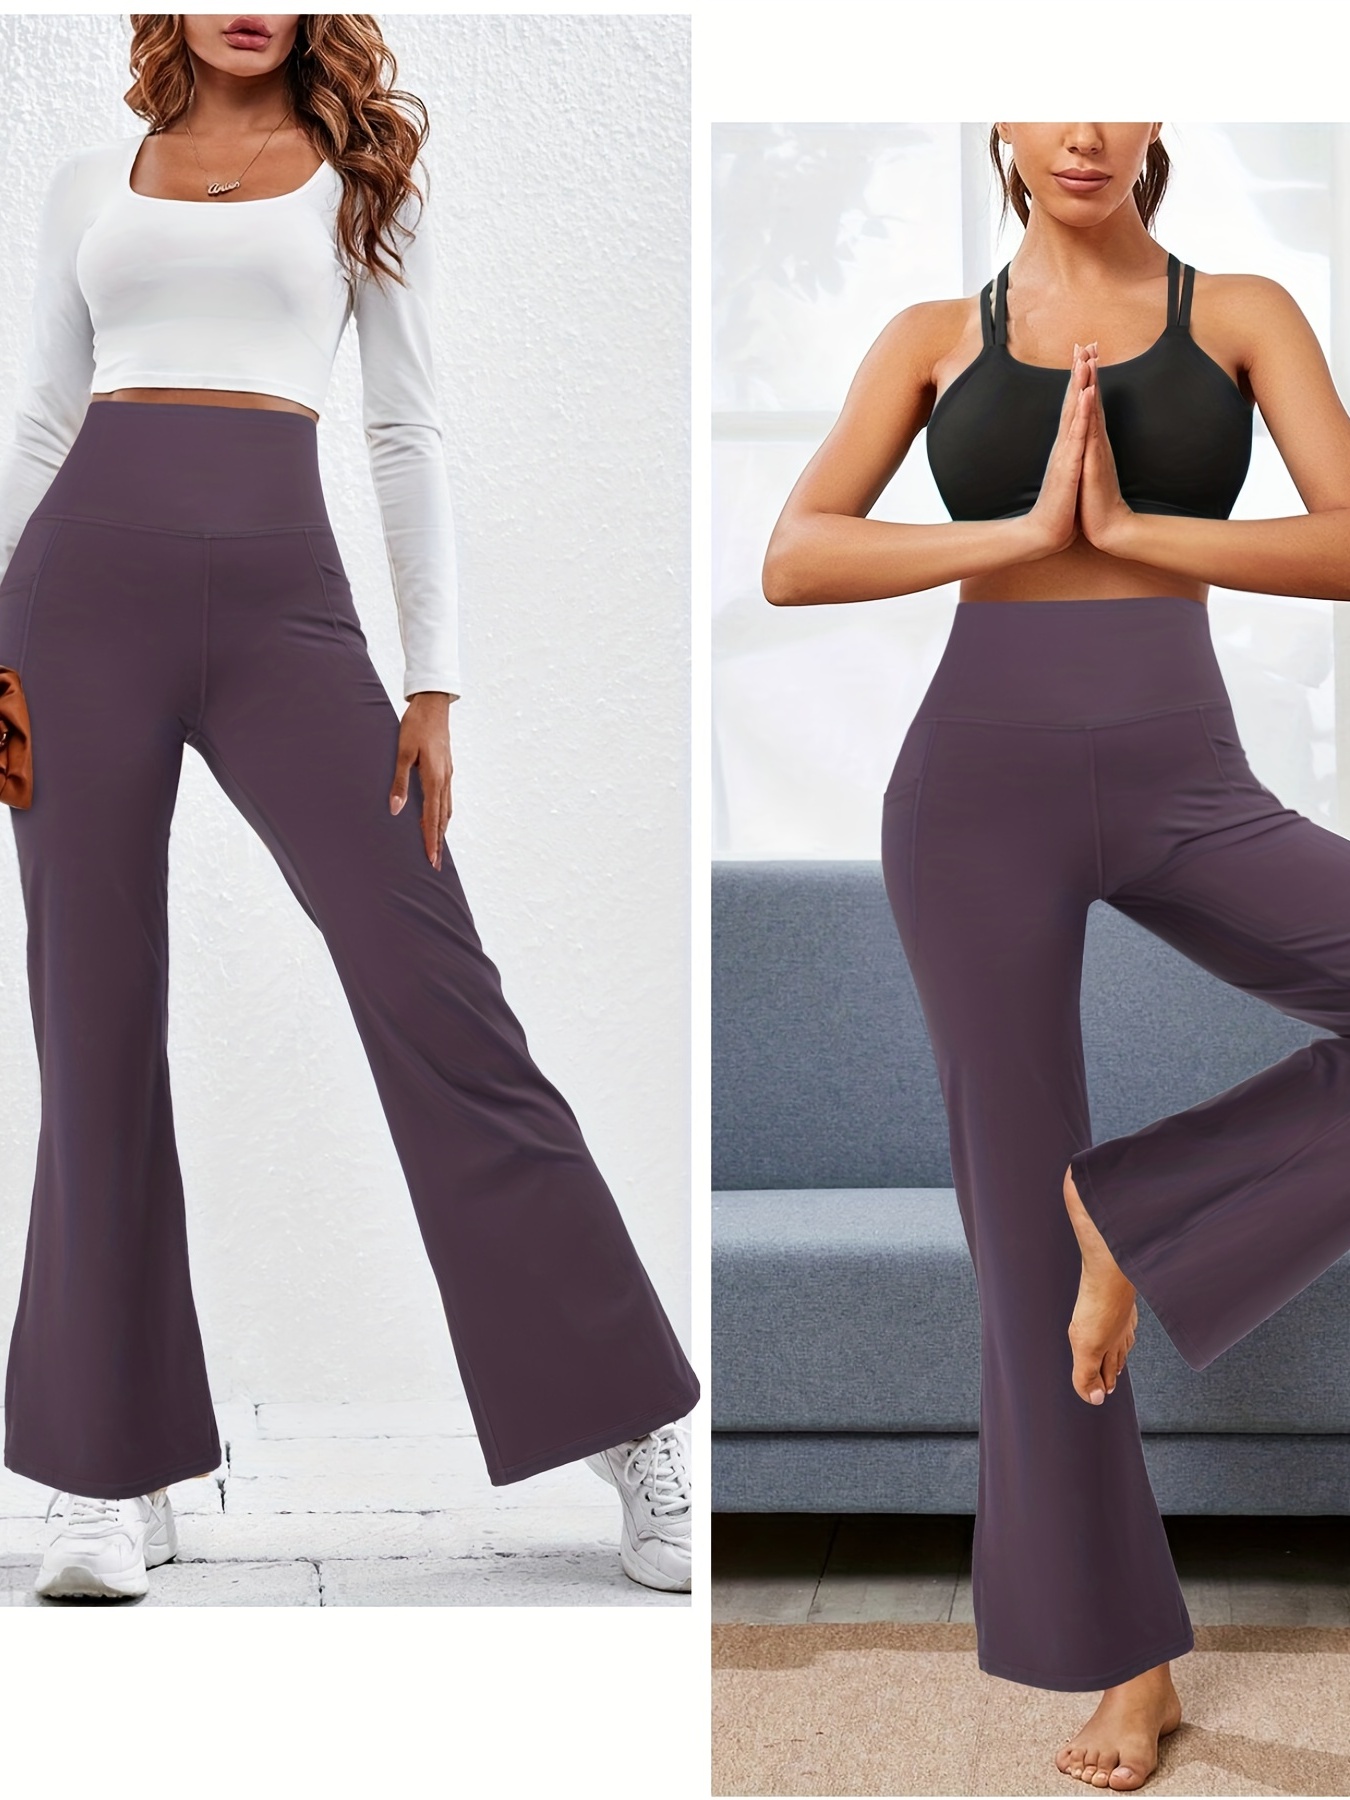 Bootcut Yoga Pants for Women High Waisted Yoga Pants with Pockets